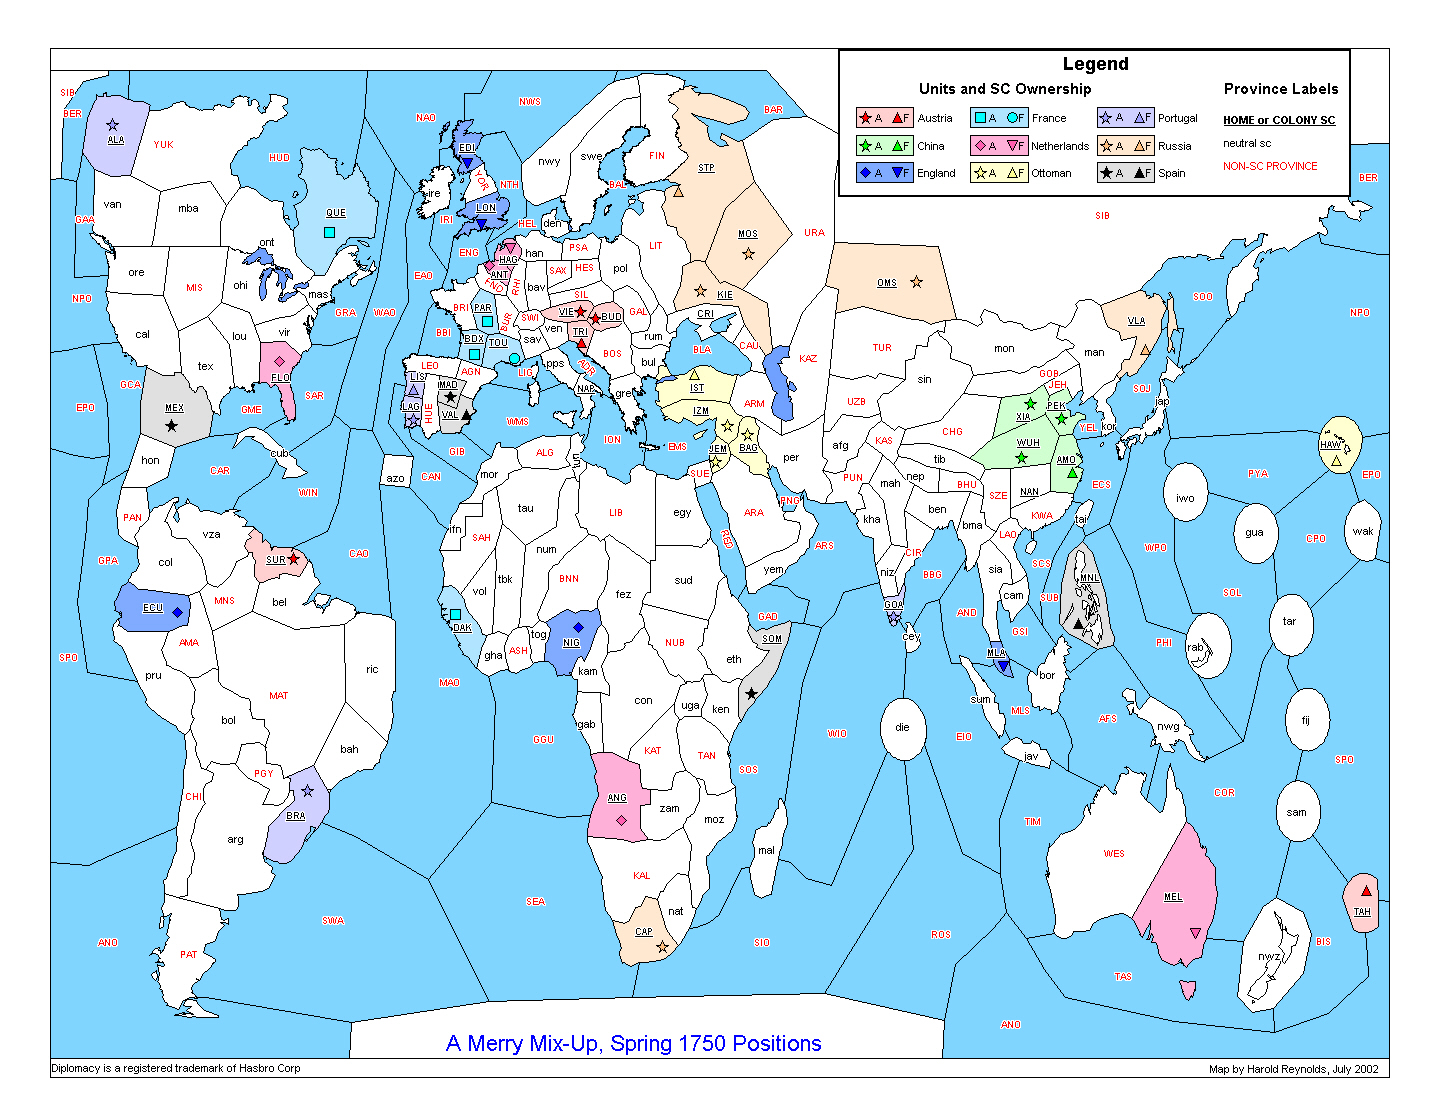 World+map+outline